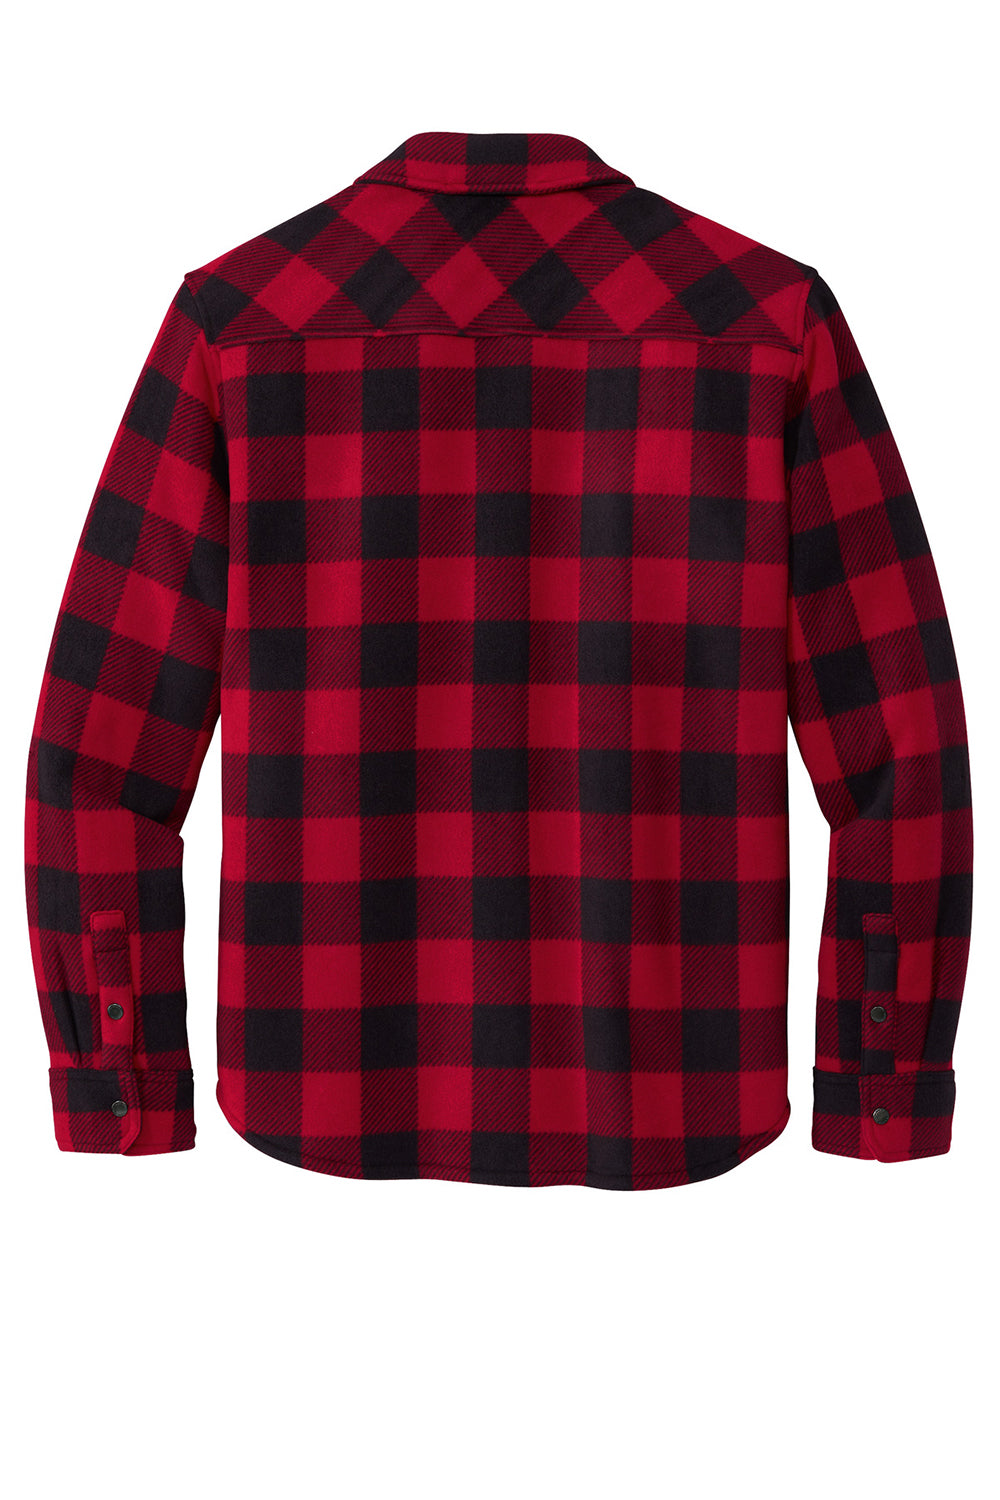 Eddie Bauer EB228 Mens Woodland Snap Front Shirt Jacket w/ Double Pockets Radish Red/Black Flat Back